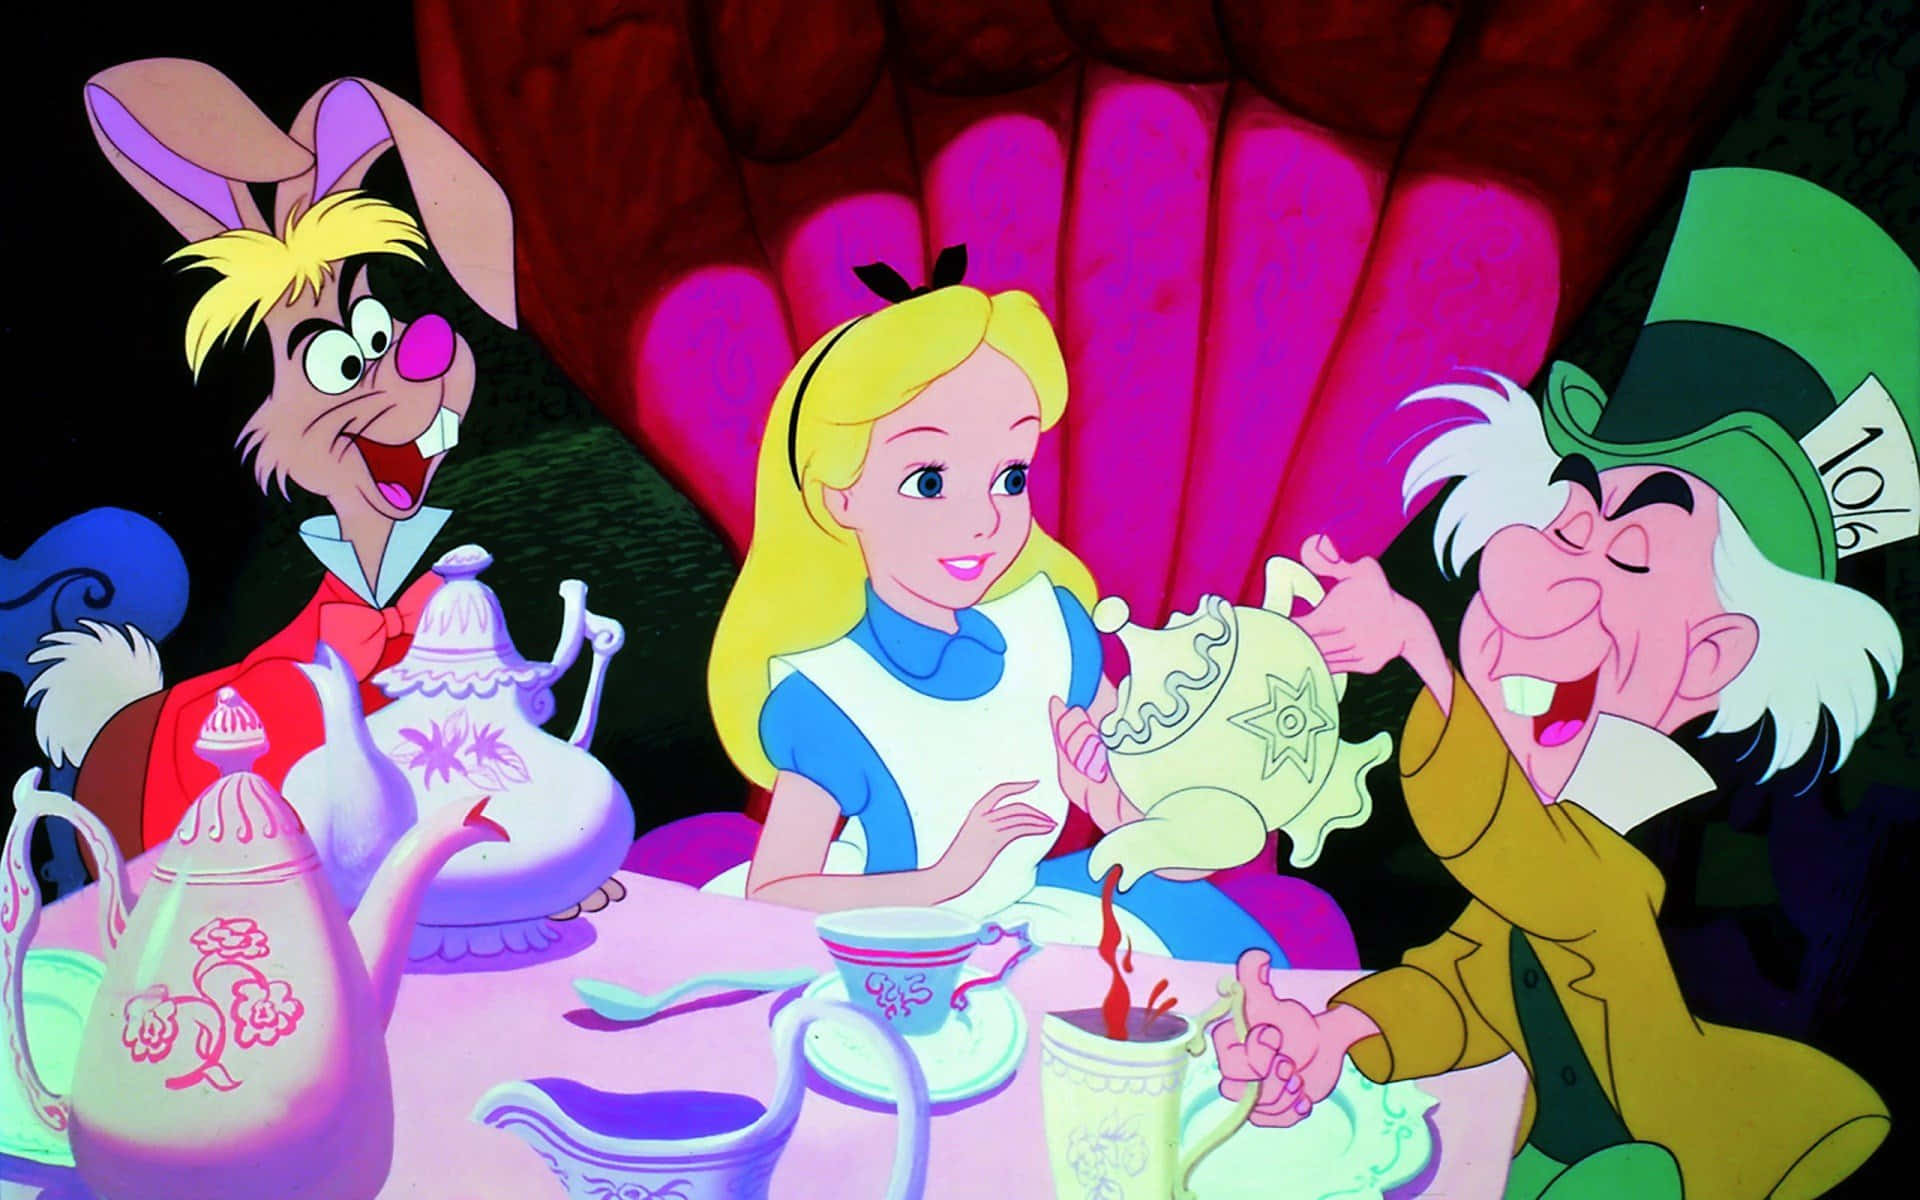 Alice's Adventure Through Wonderland